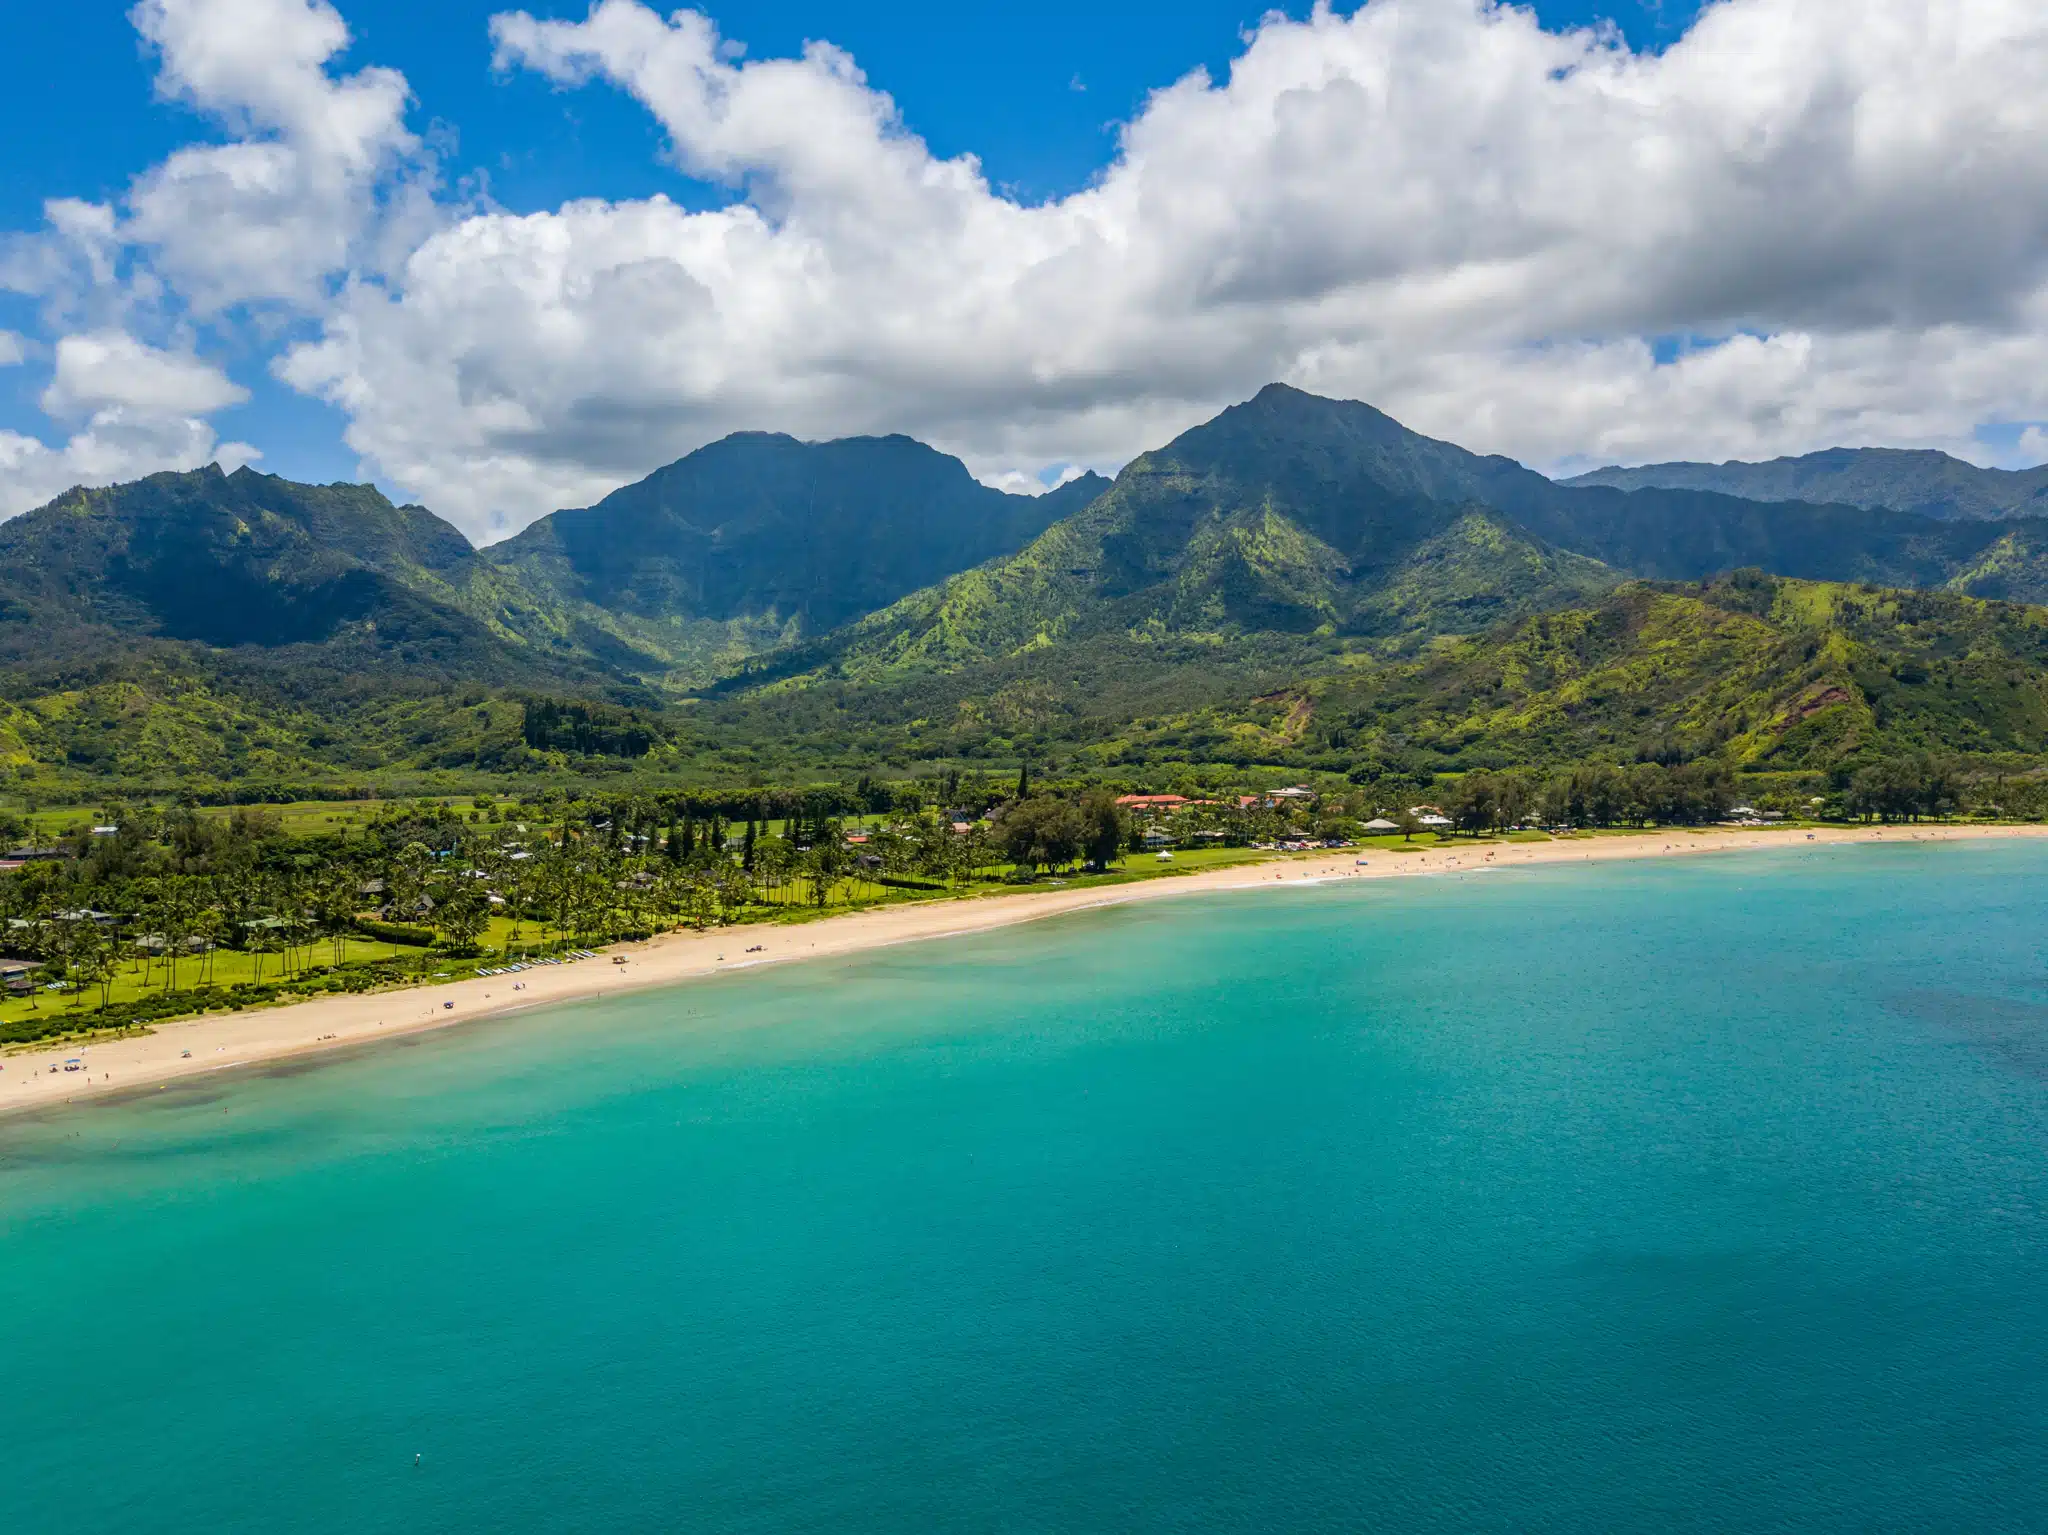 Hanalei Bay is a Beach located in the city of Hanalei on Kauai, Hawaii